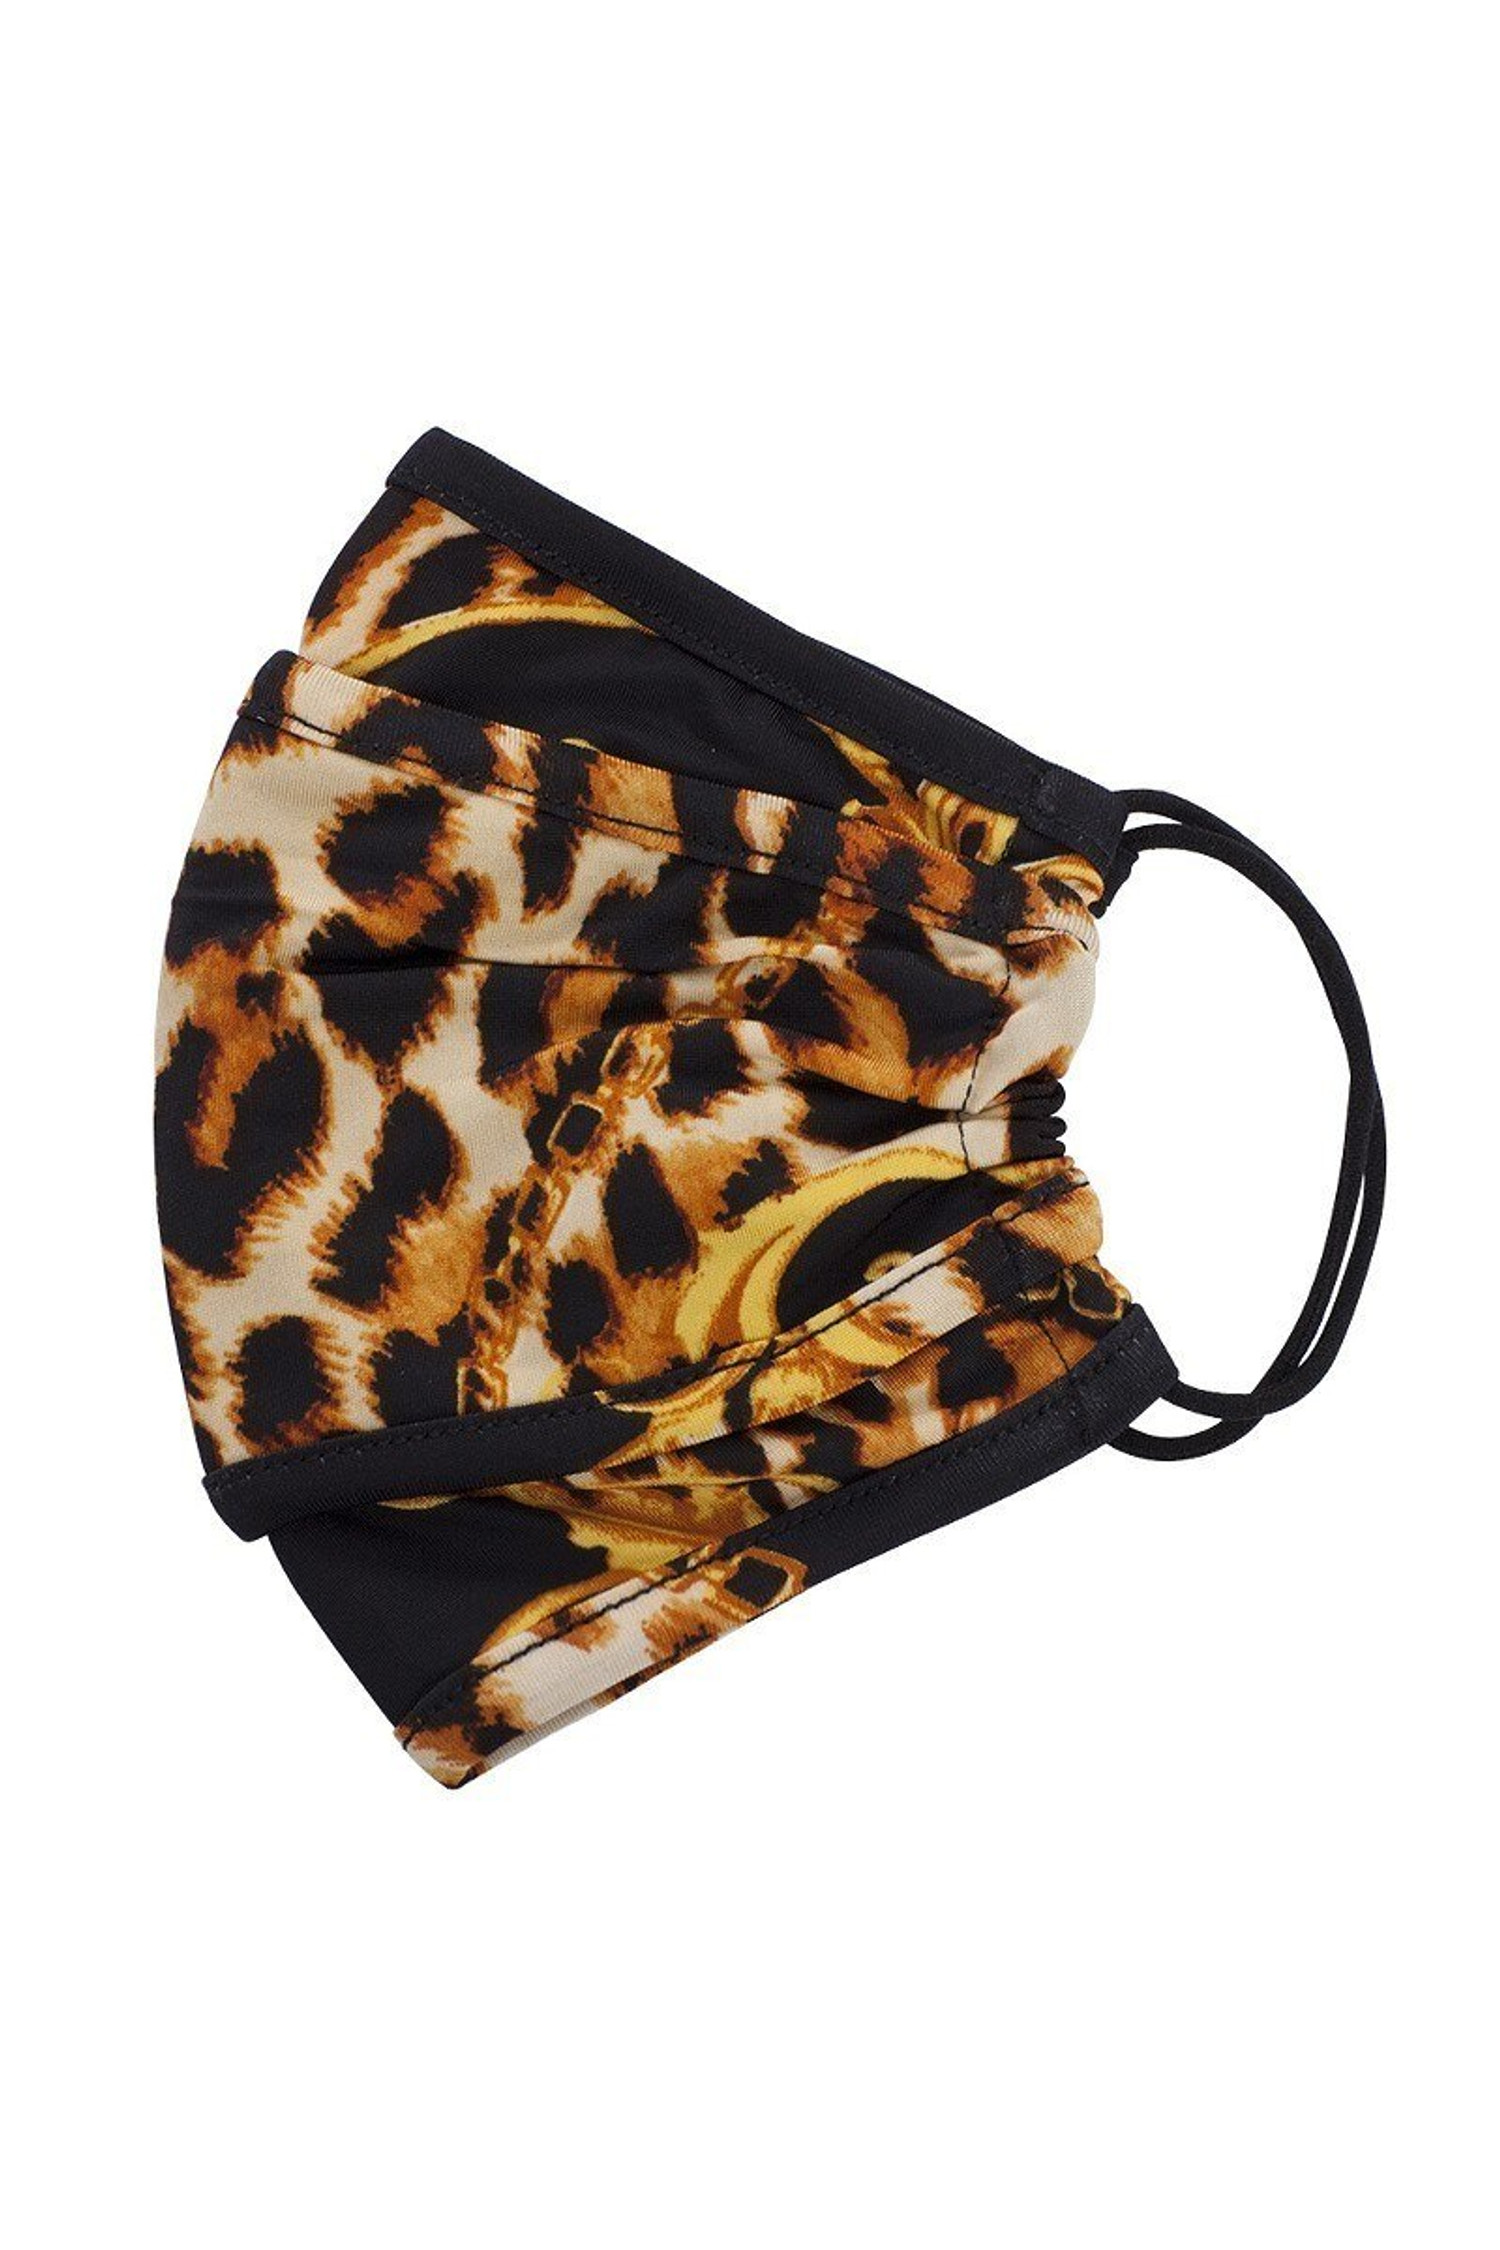 Tri-Fold Chic Moda Leopard Face Mask - Made in USA